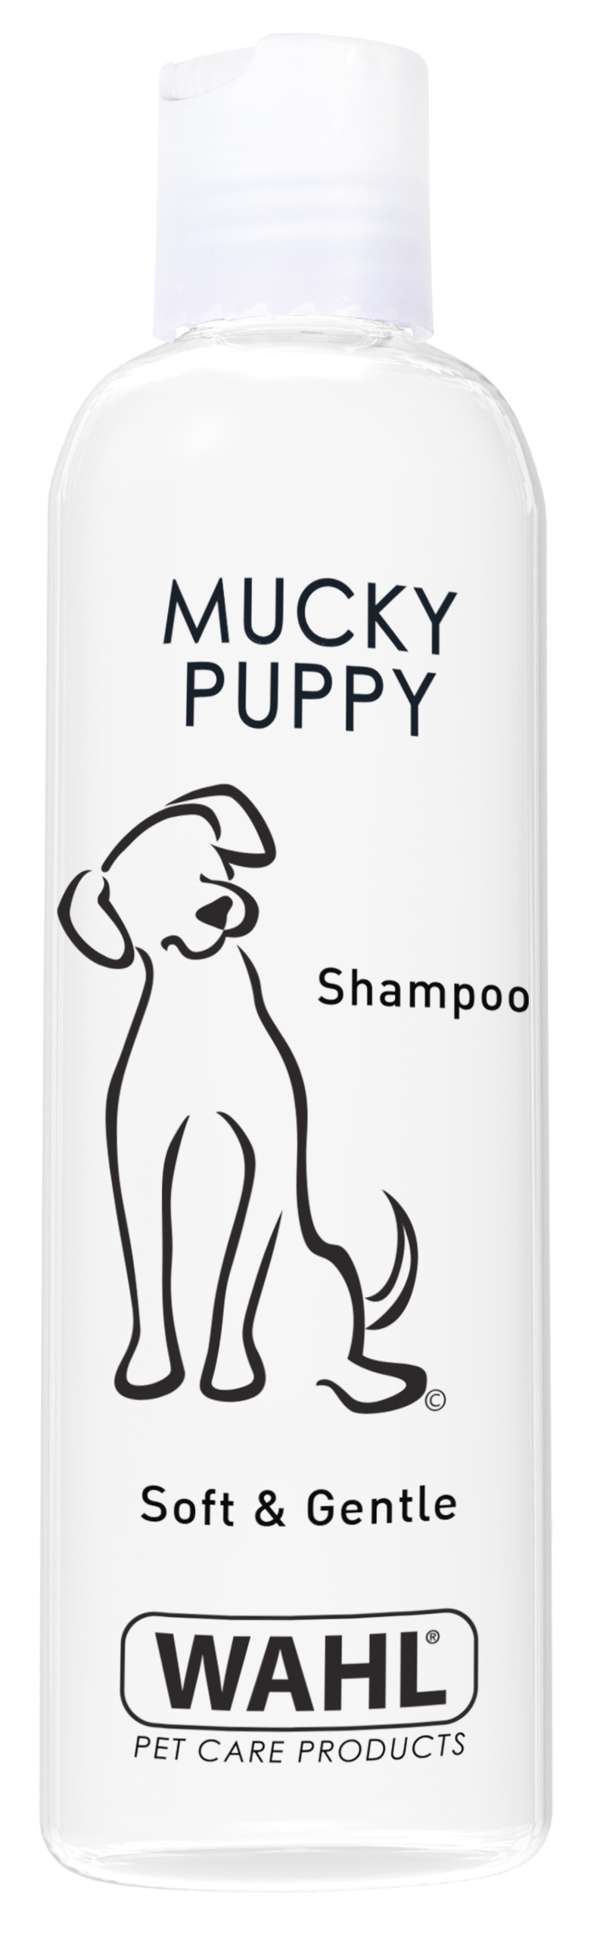 Wahl Mucky Puppy Shampoo 250ml